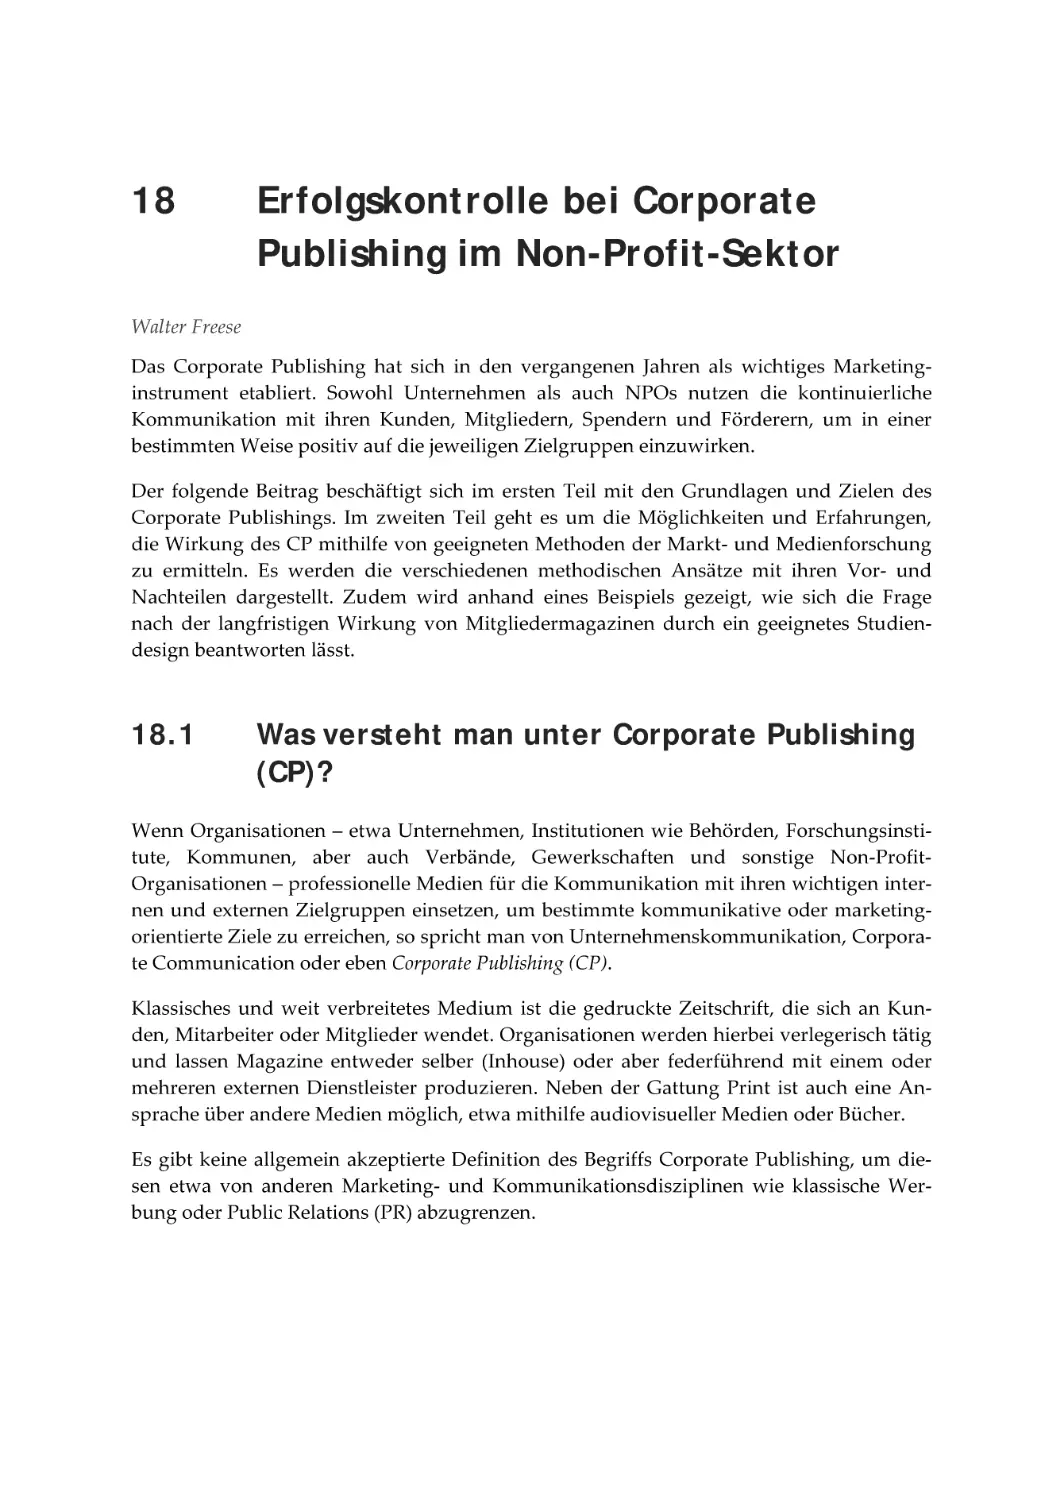 18 Erfolgskontrolle bei Corporate Publishing im Non-Profit-Sektor
18.1 Was versteht man unter Corporate Publishing (CP)?